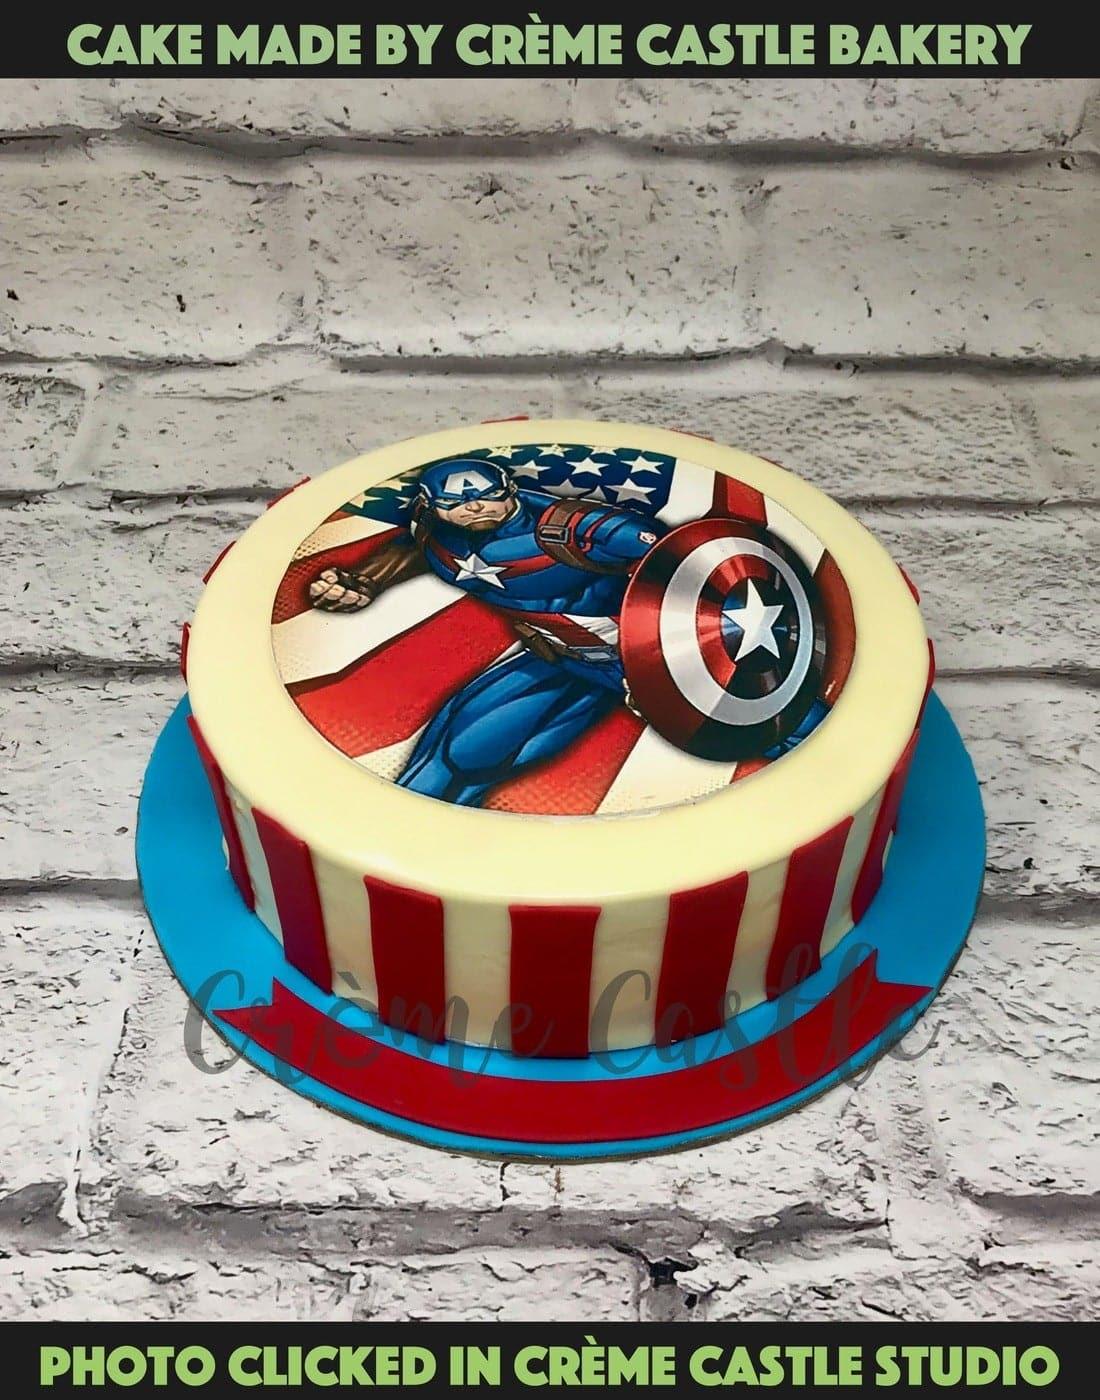 Top Captain America Cakes - CakeCentral.com